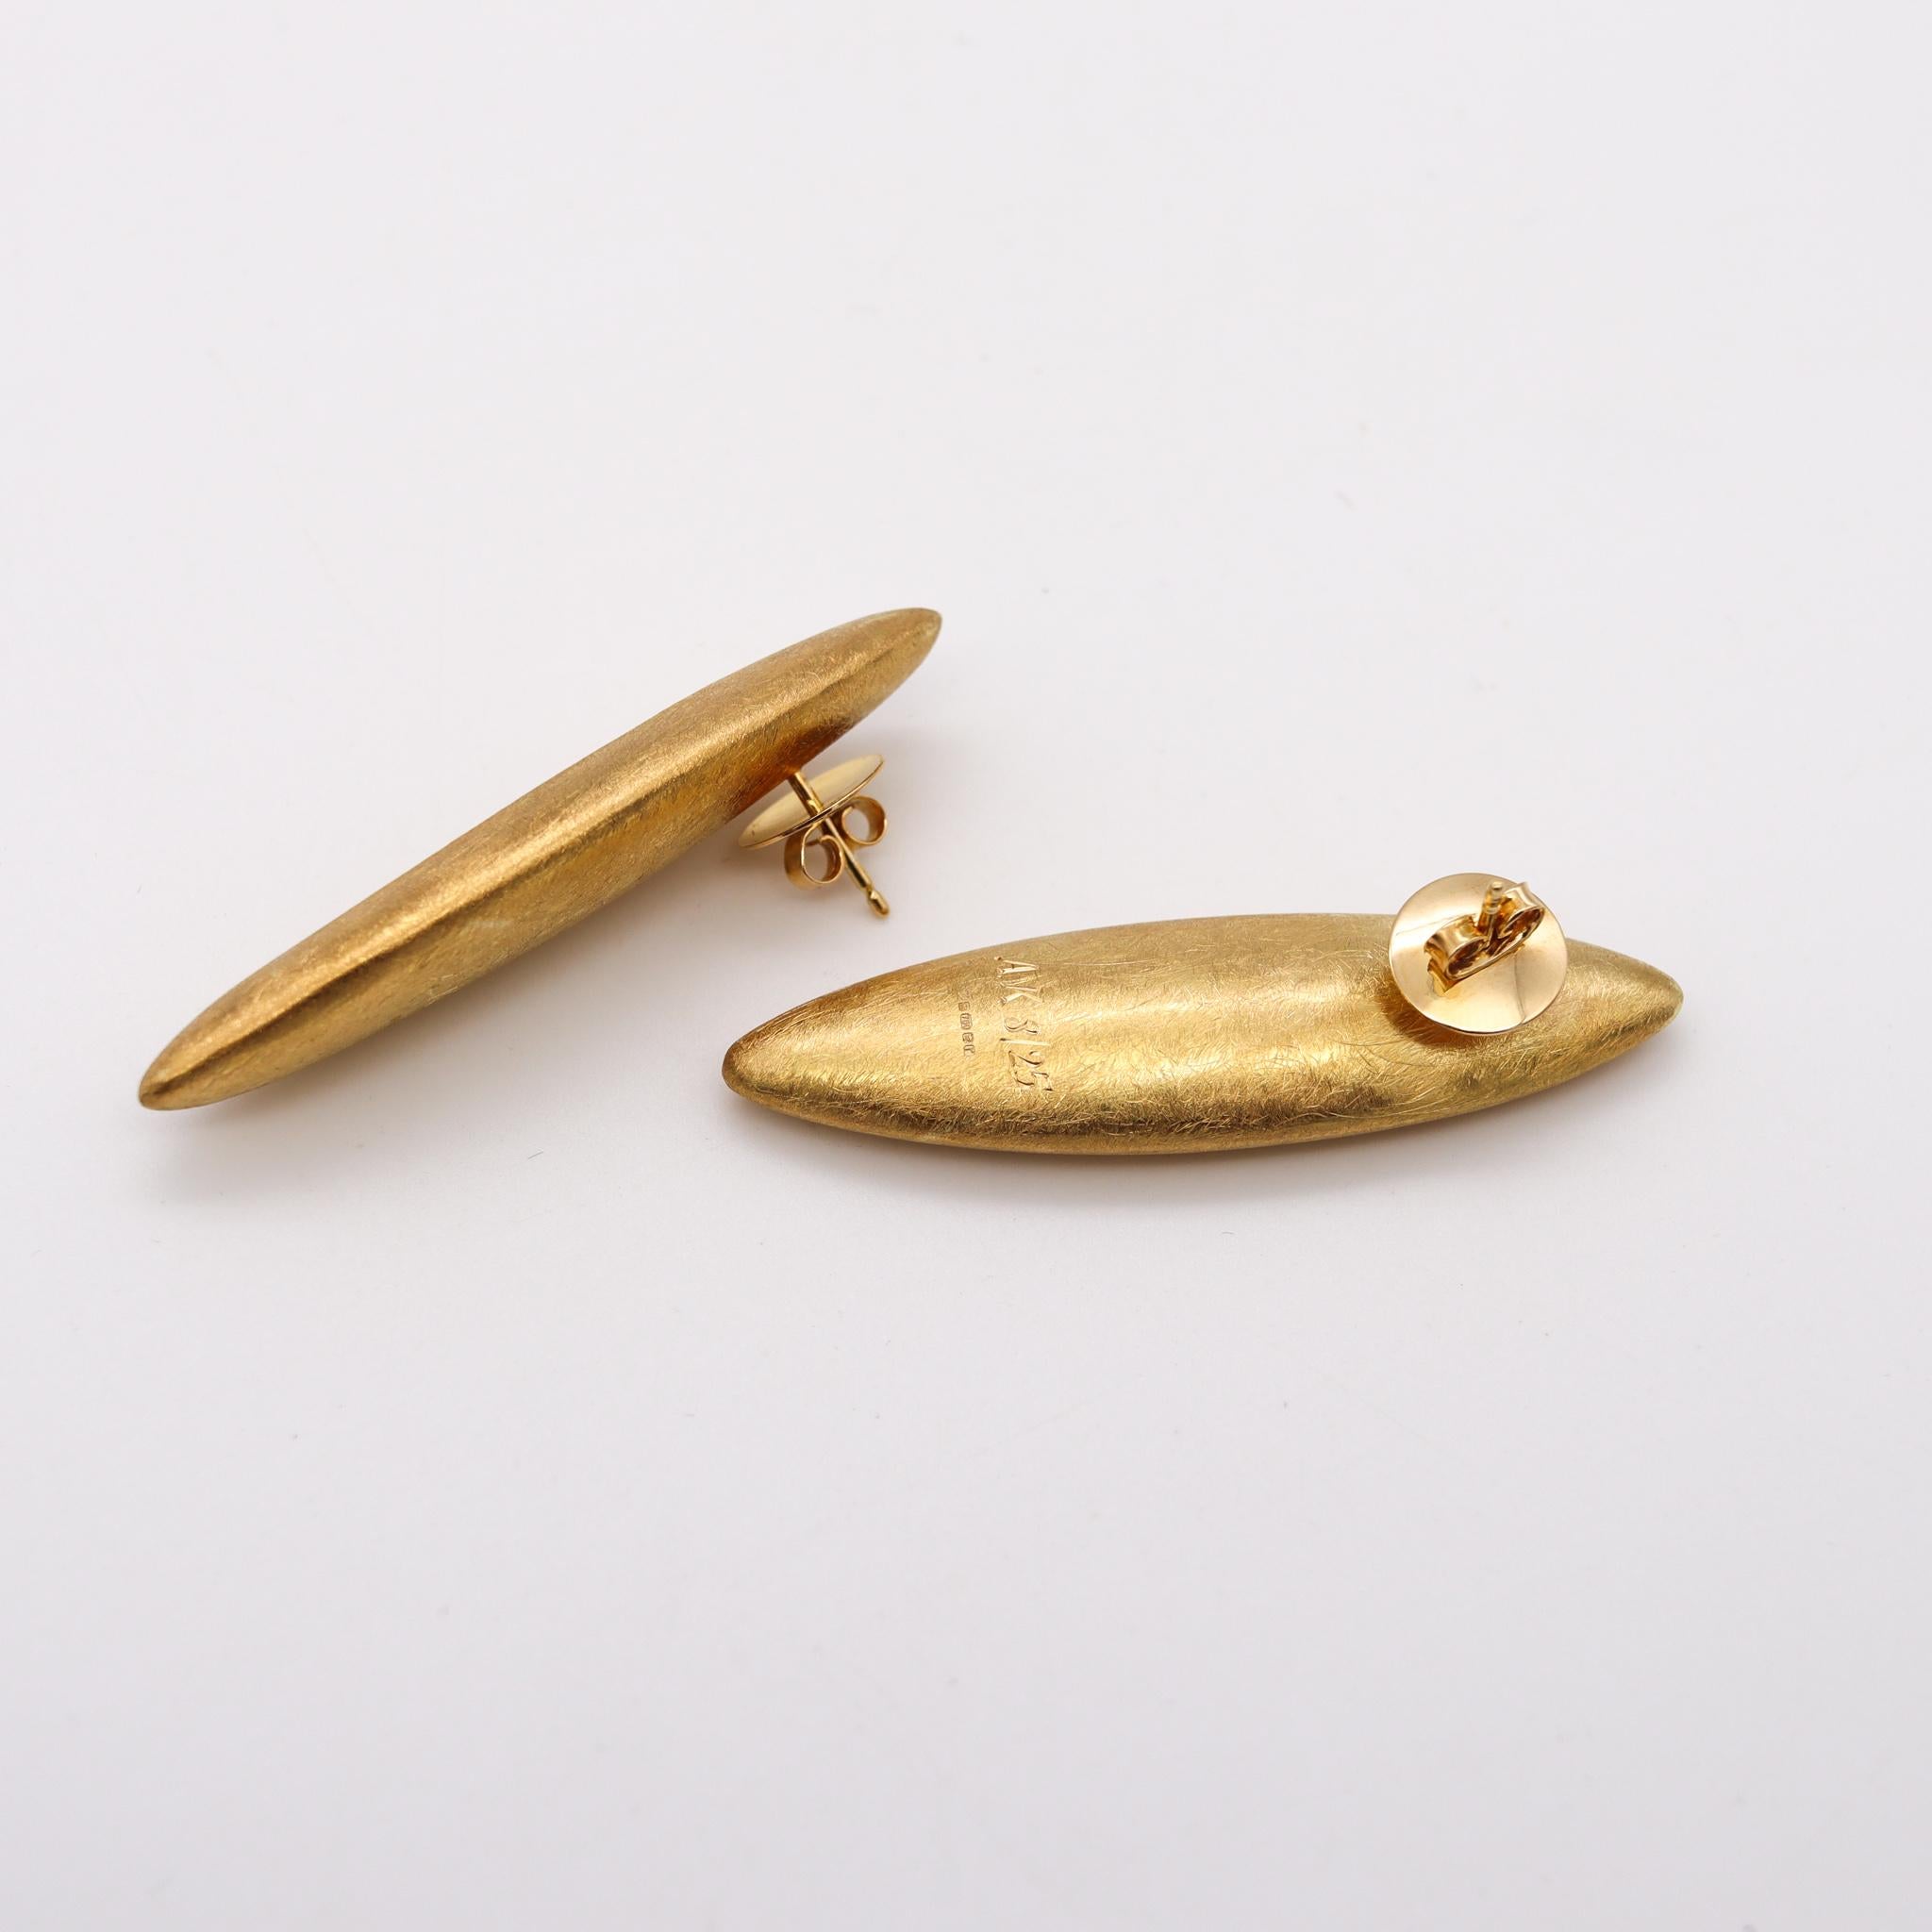 Modernist Anish Kapoor 2010 London Rare Pair of Sculptural Torpedo Earrings in 18Kt Gold For Sale